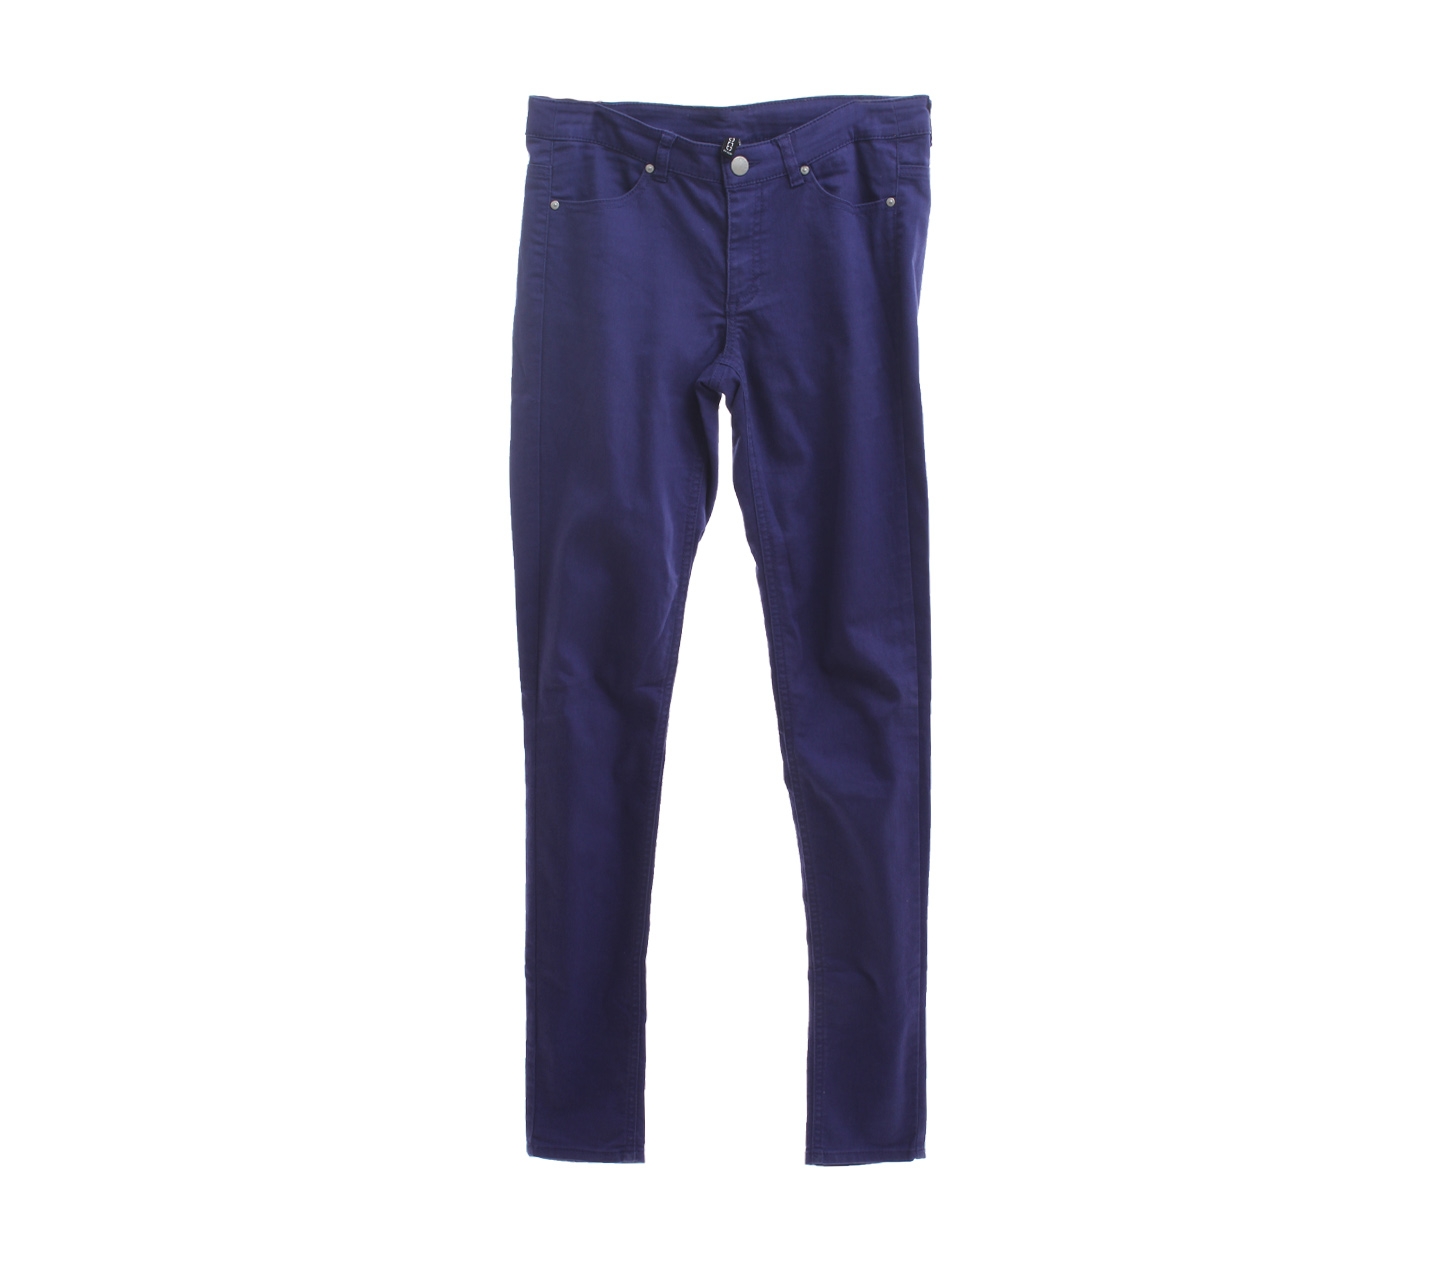 H&M Purple Long Pants